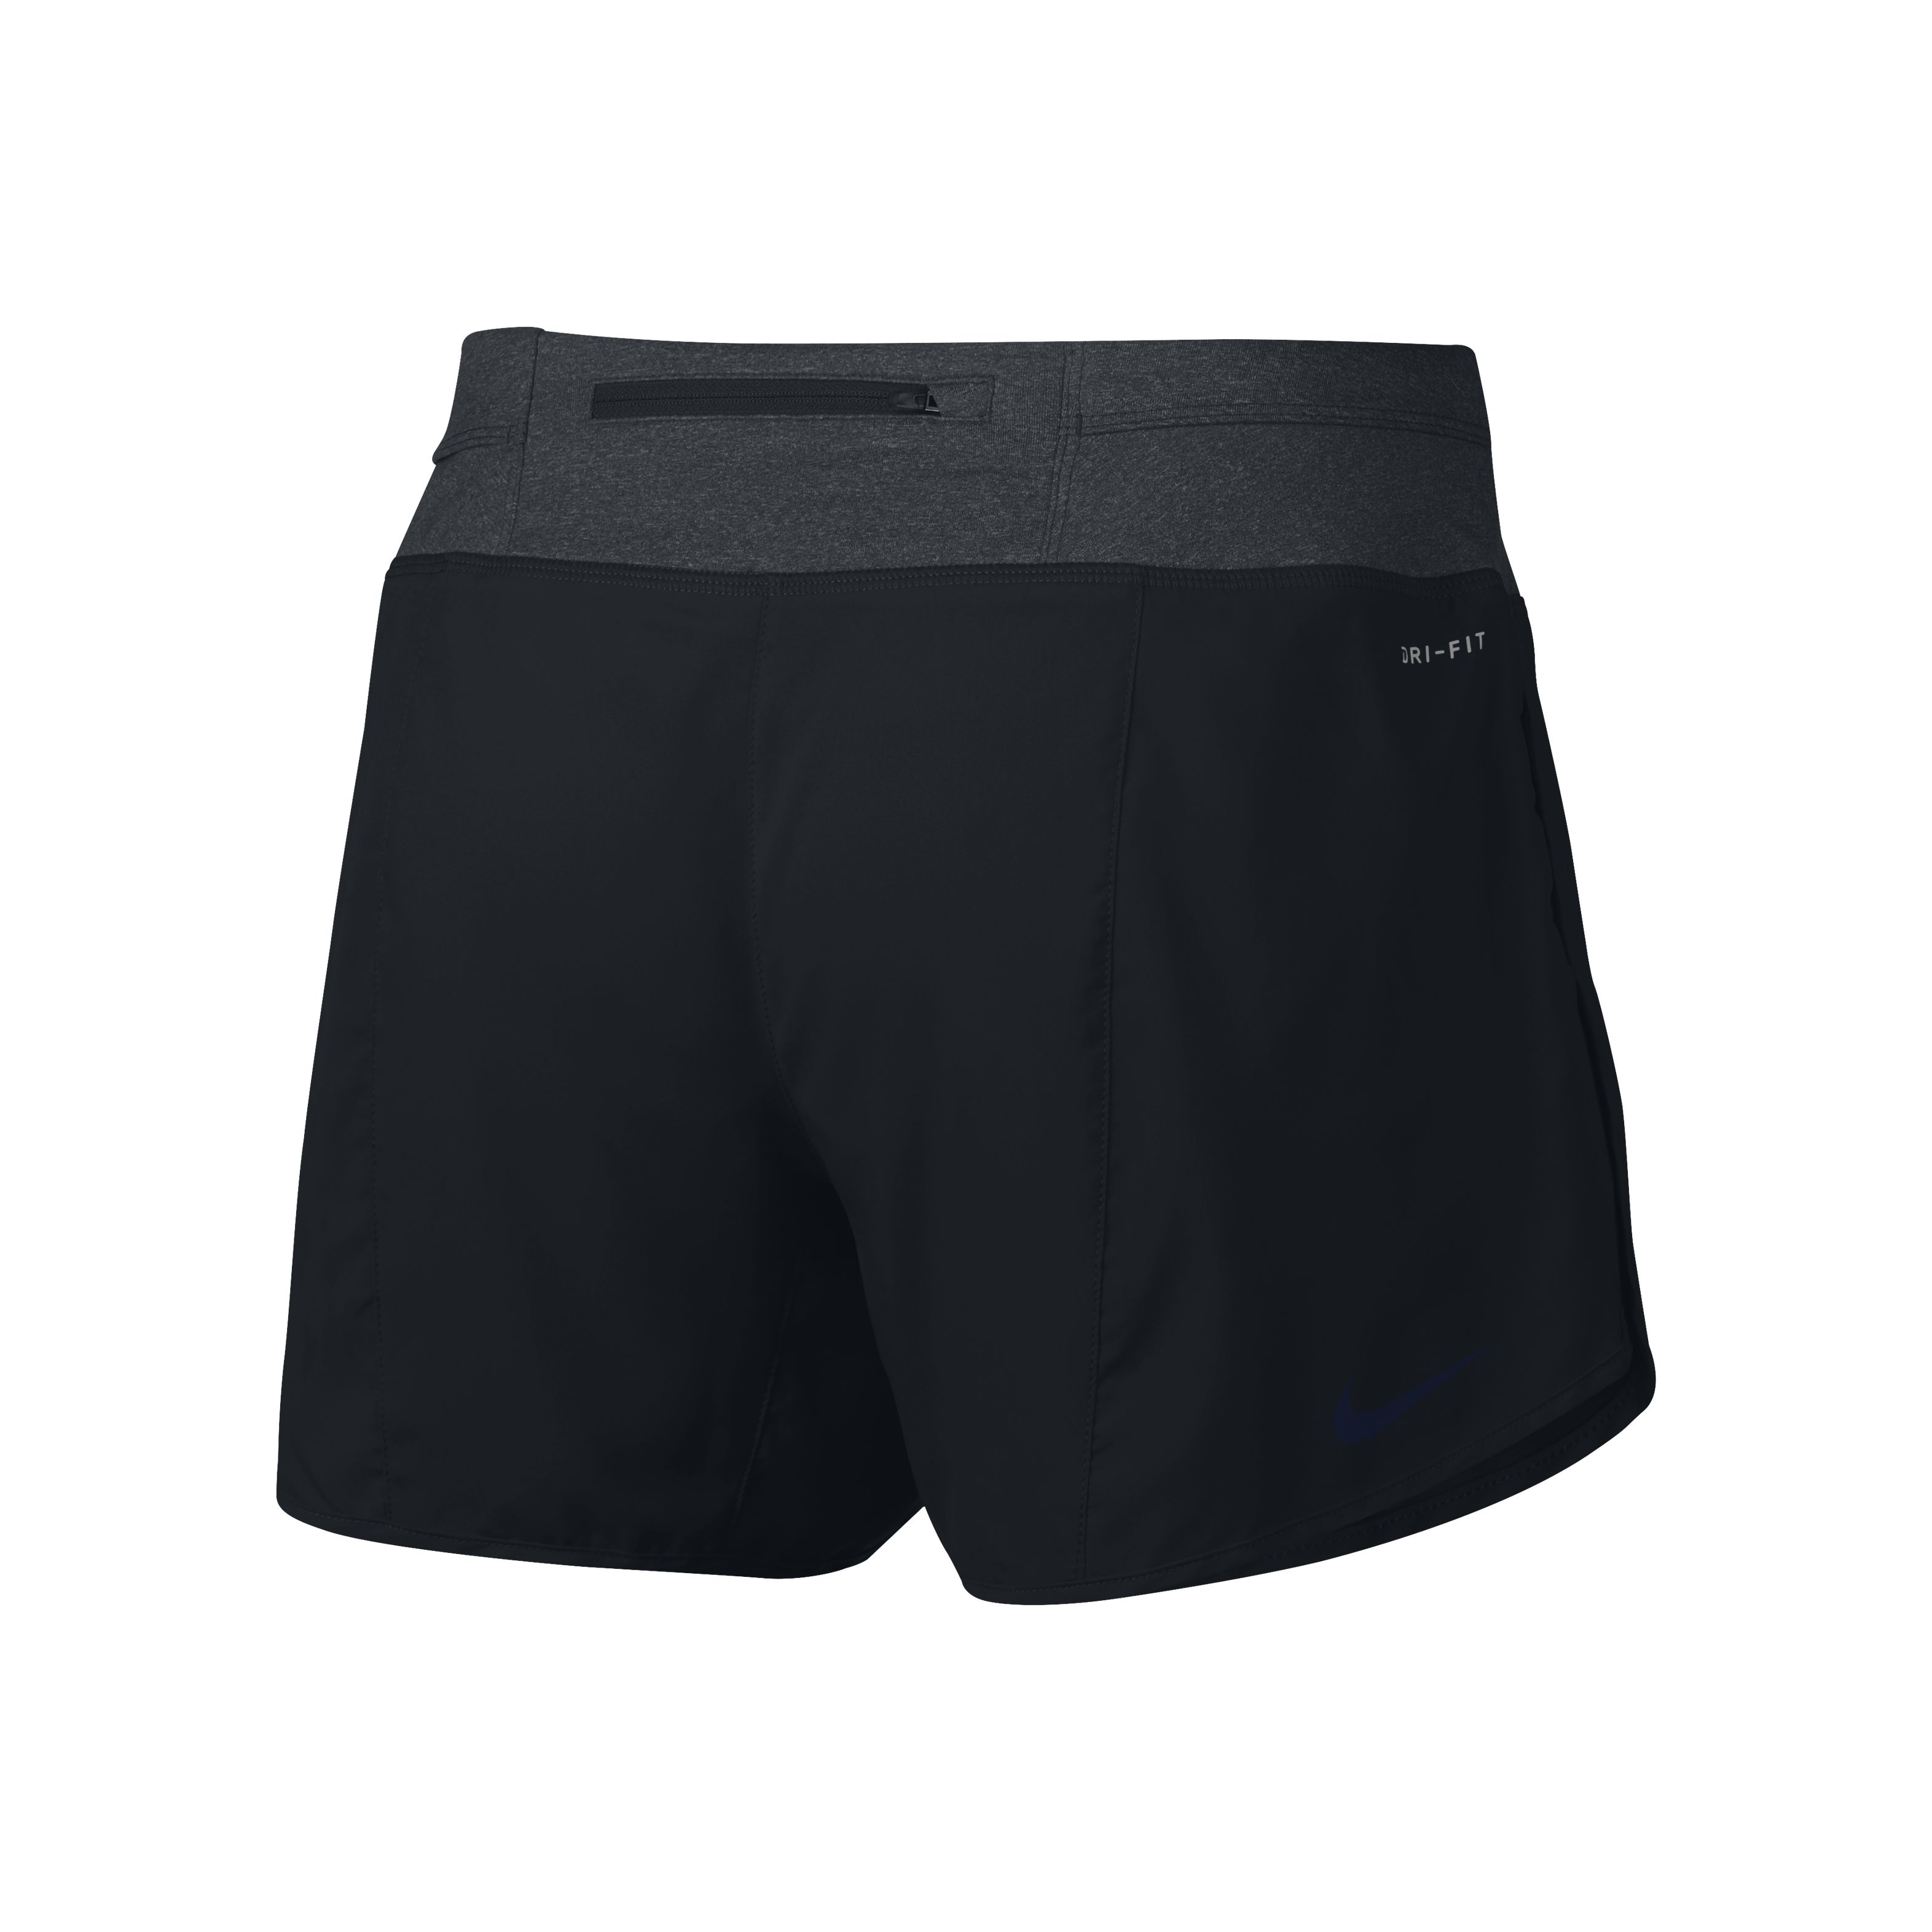 nike rival running shorts